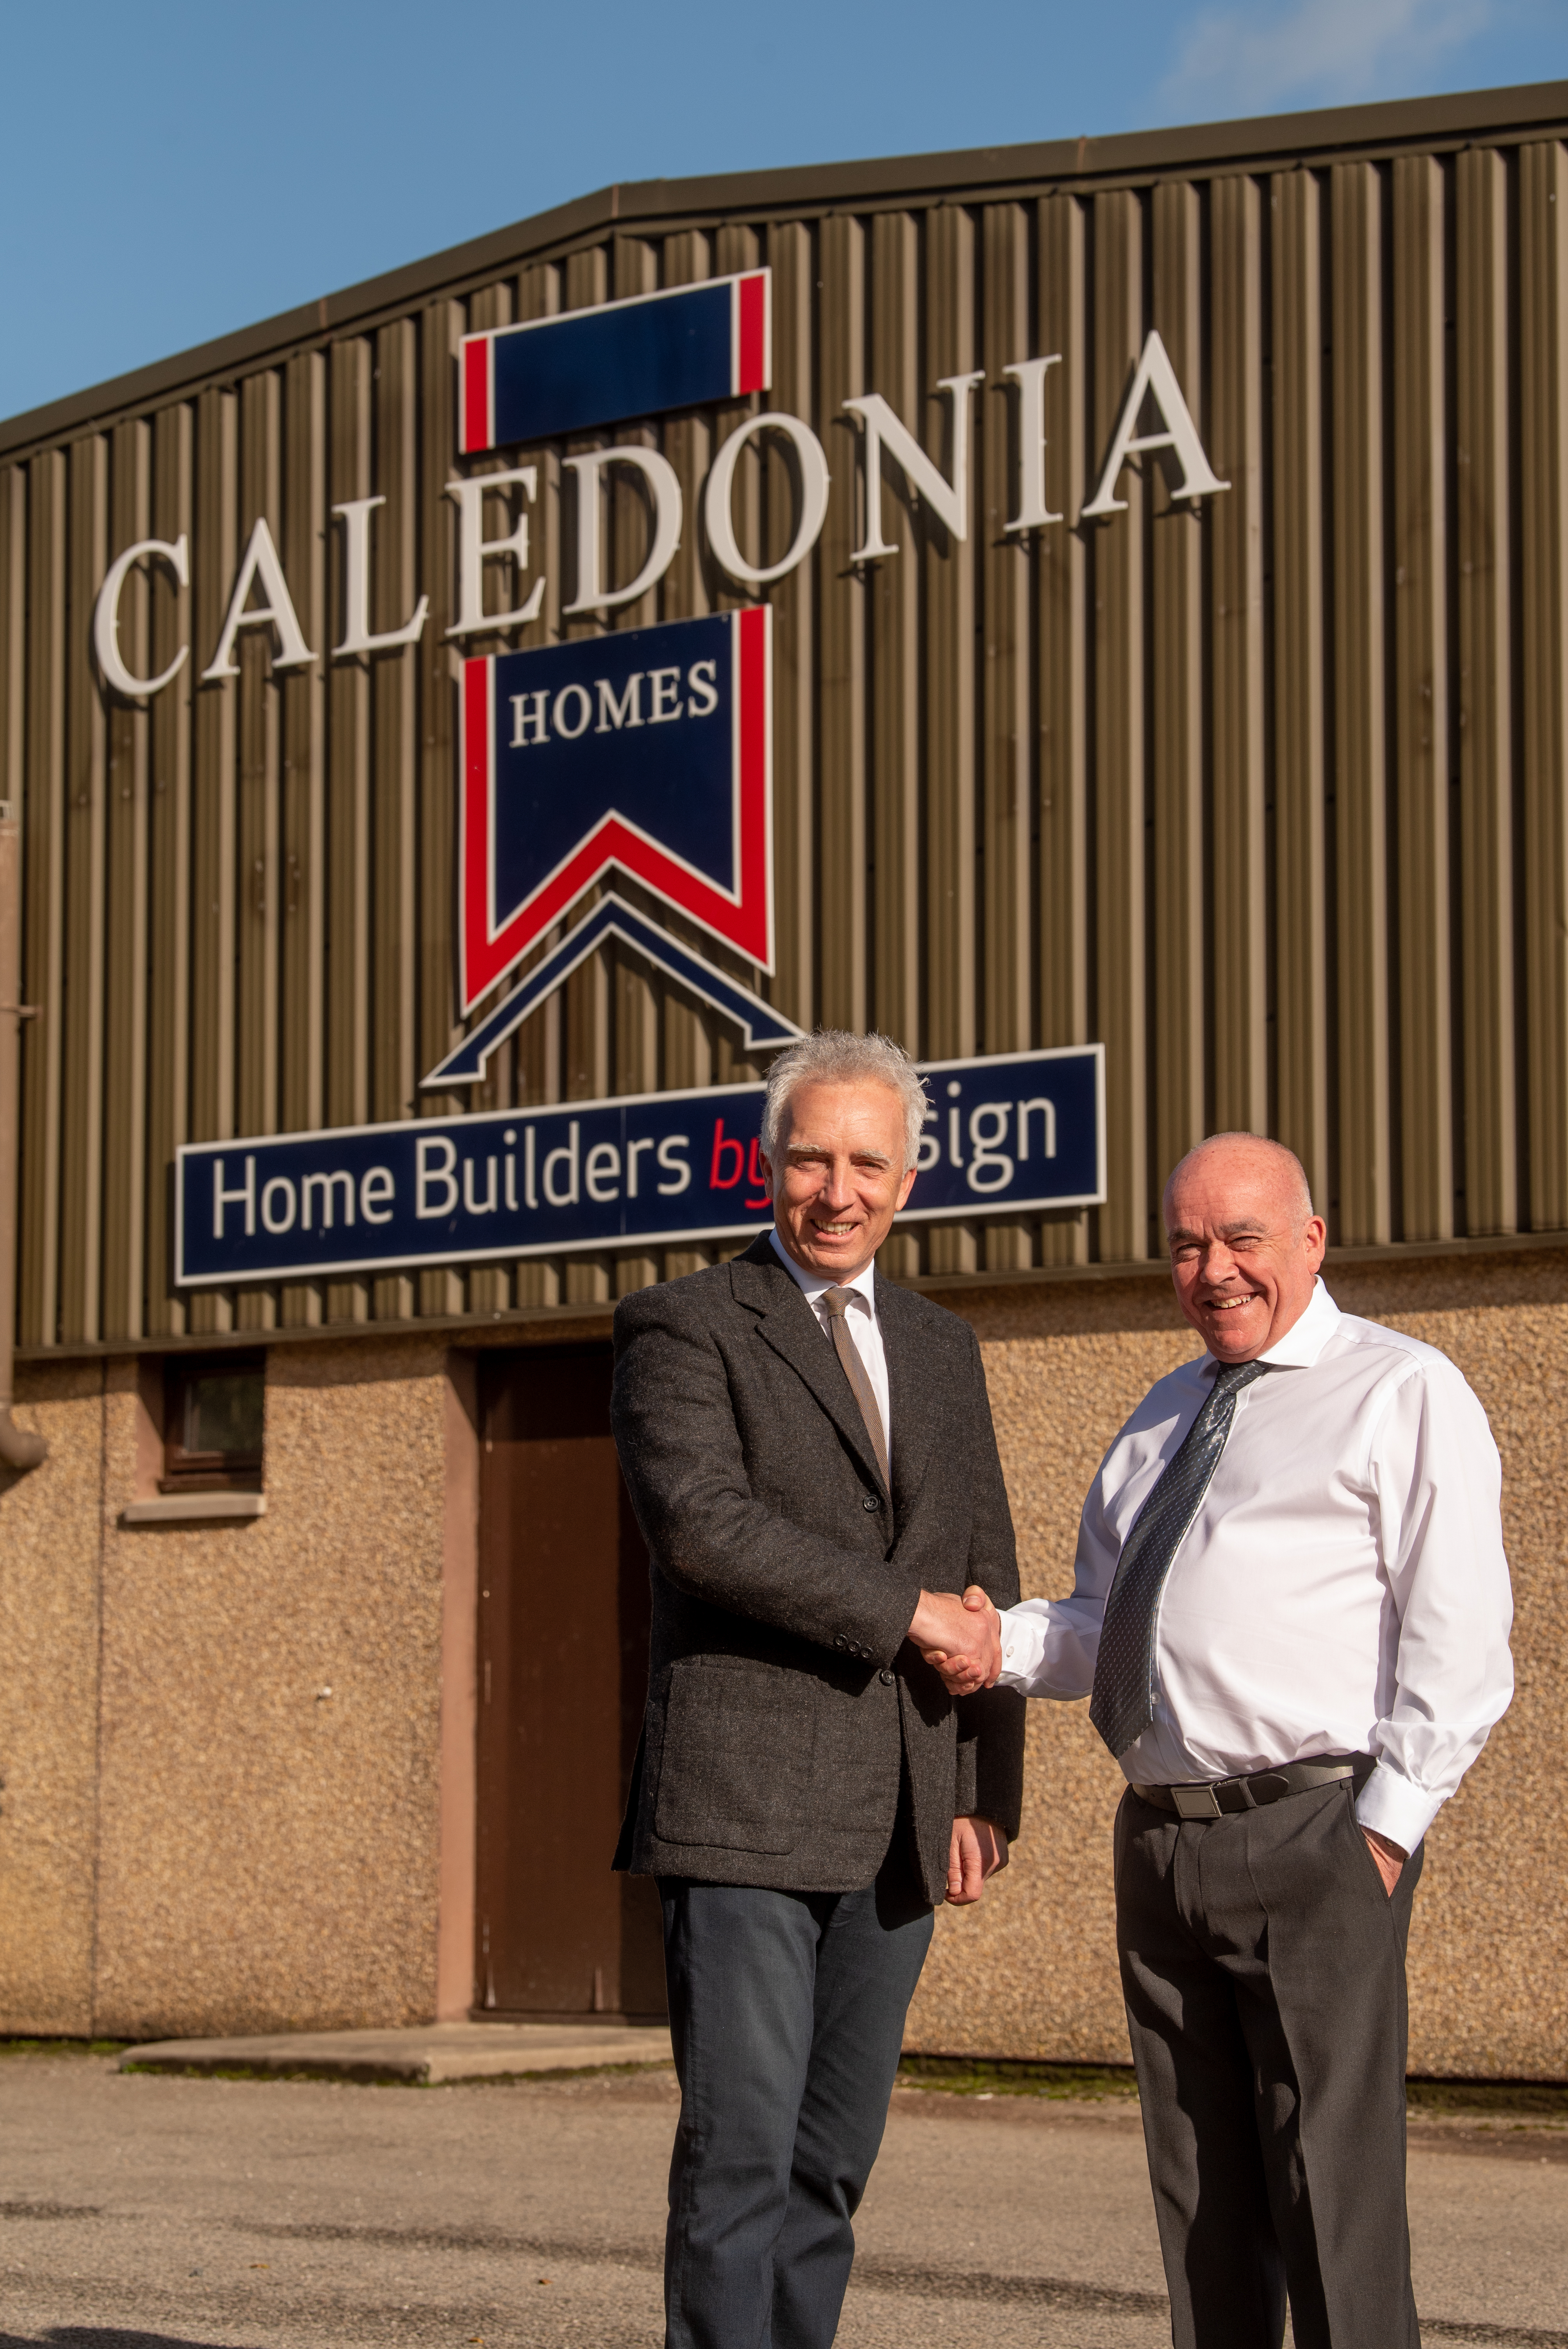 Scotia Homes acquires Caledonia Homes (Scotland) Limited